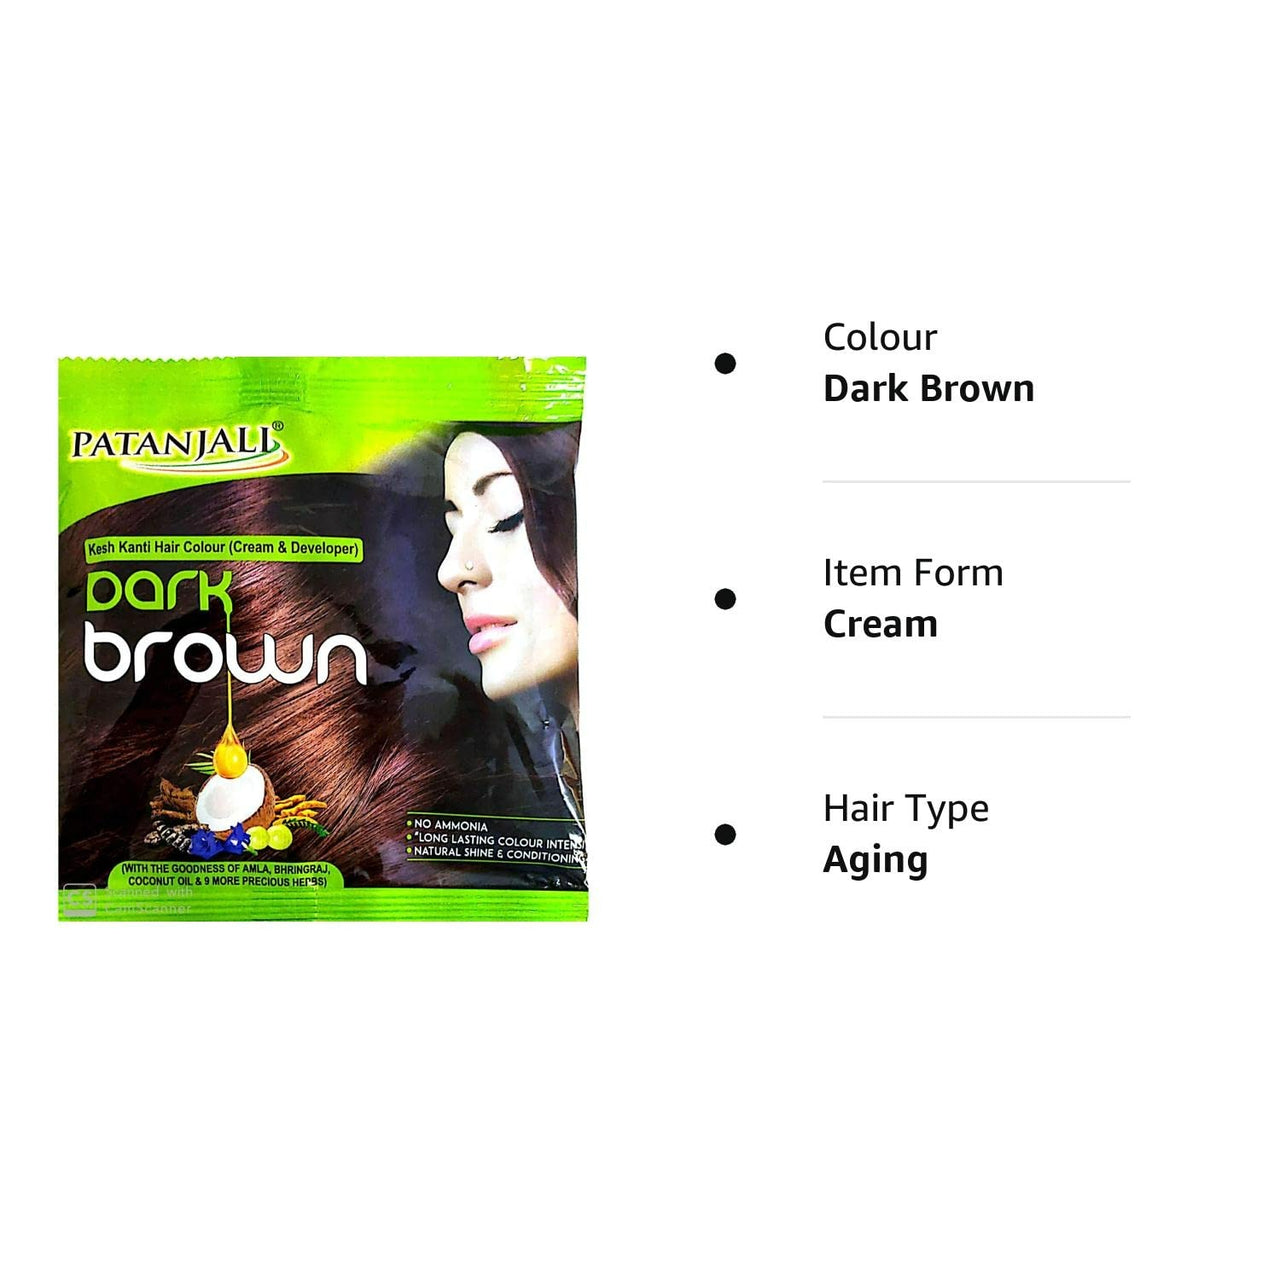 Patanjali Kesh Kanti Hair Colour (Cream & Developer) - Dark Brown